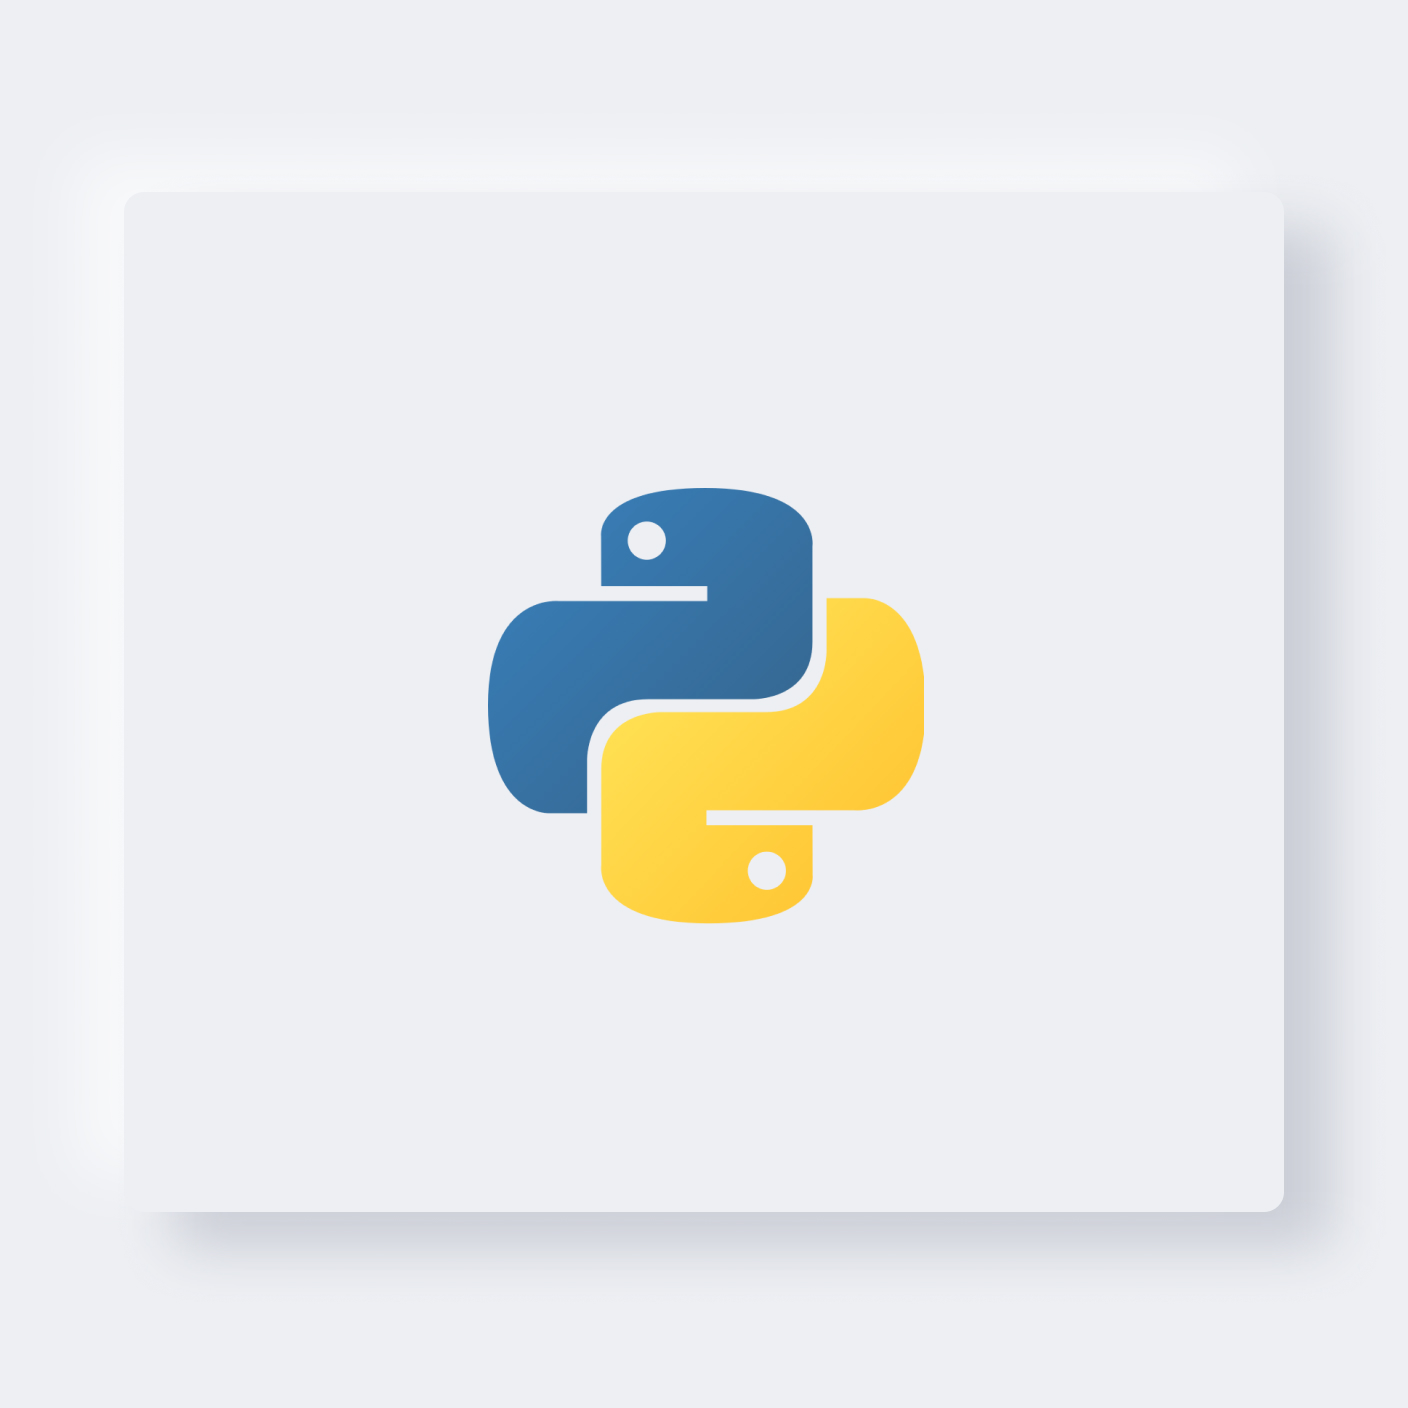 Python - coding language